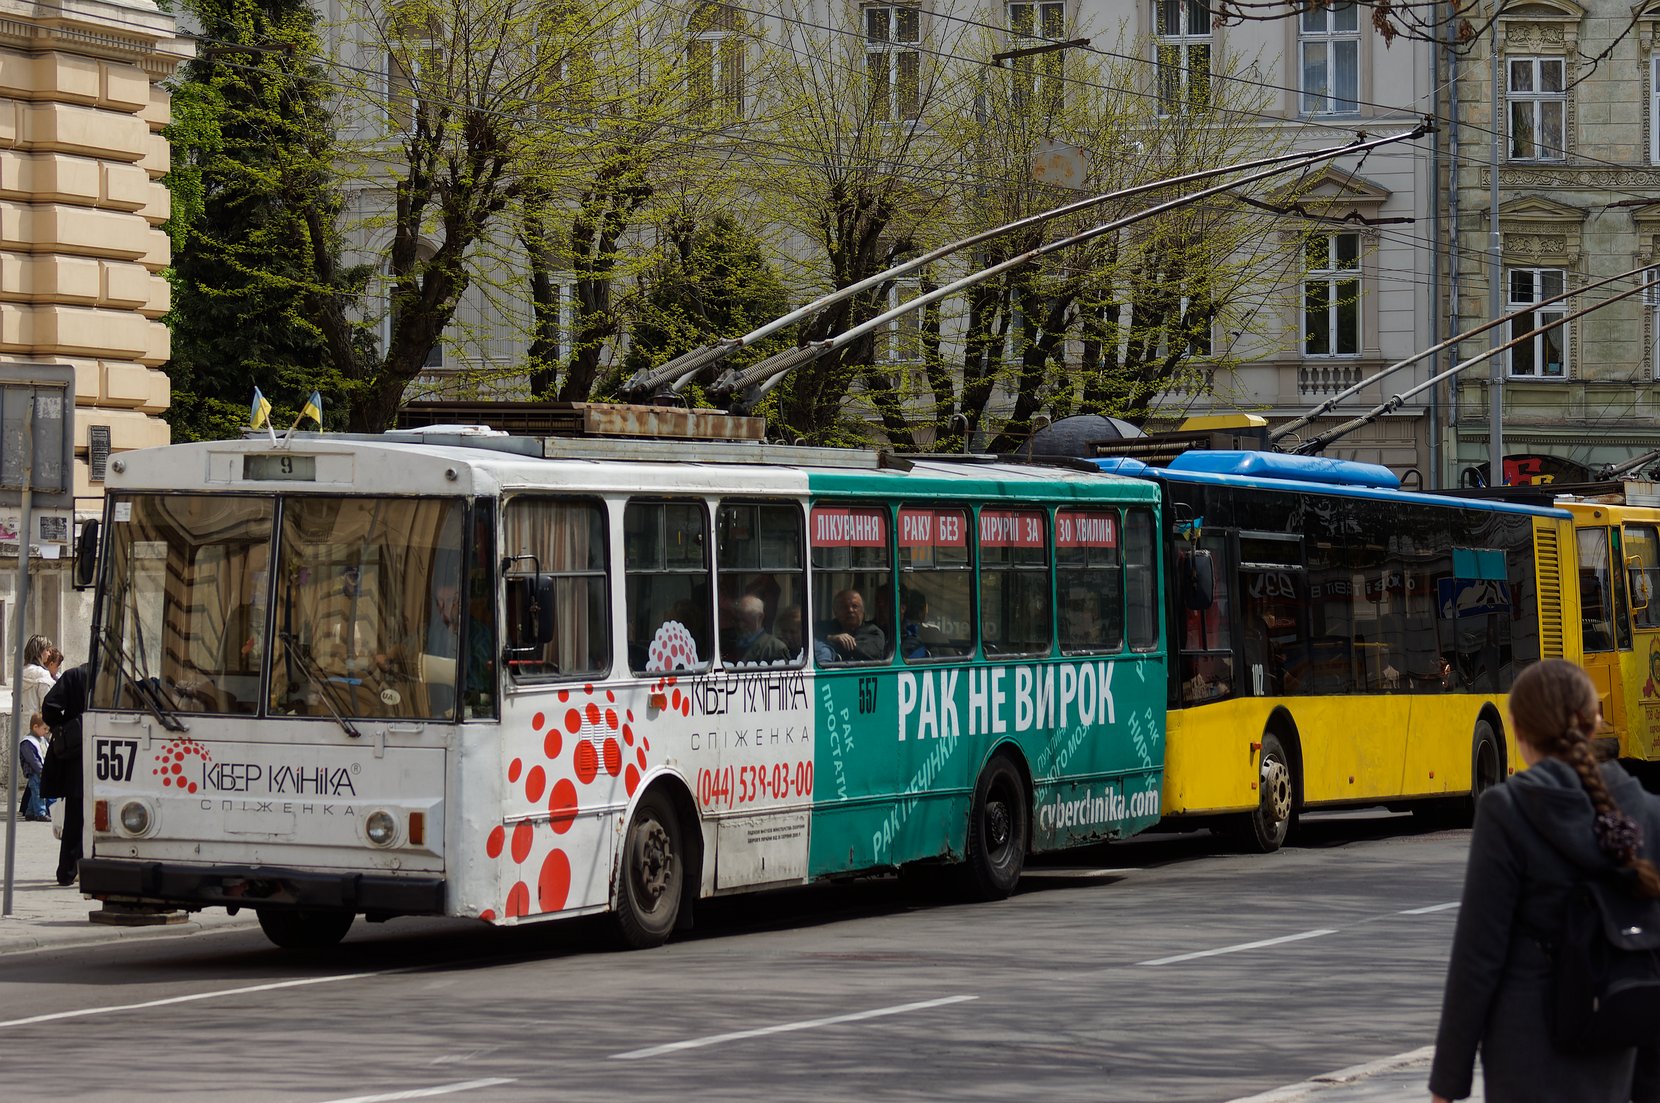 Trolleybusse